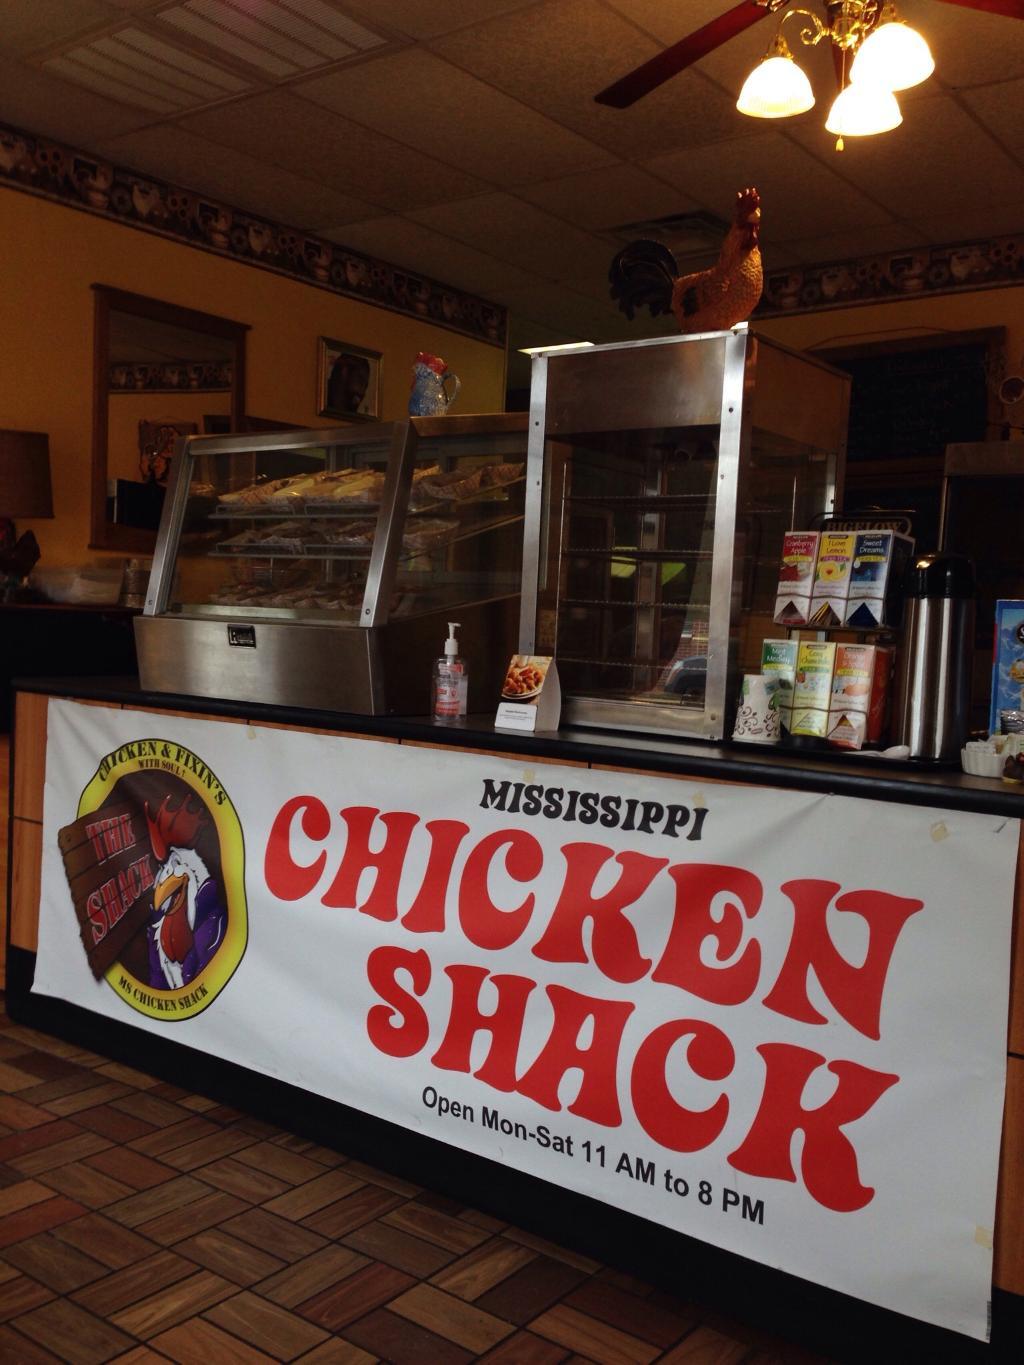 MS chicken shack